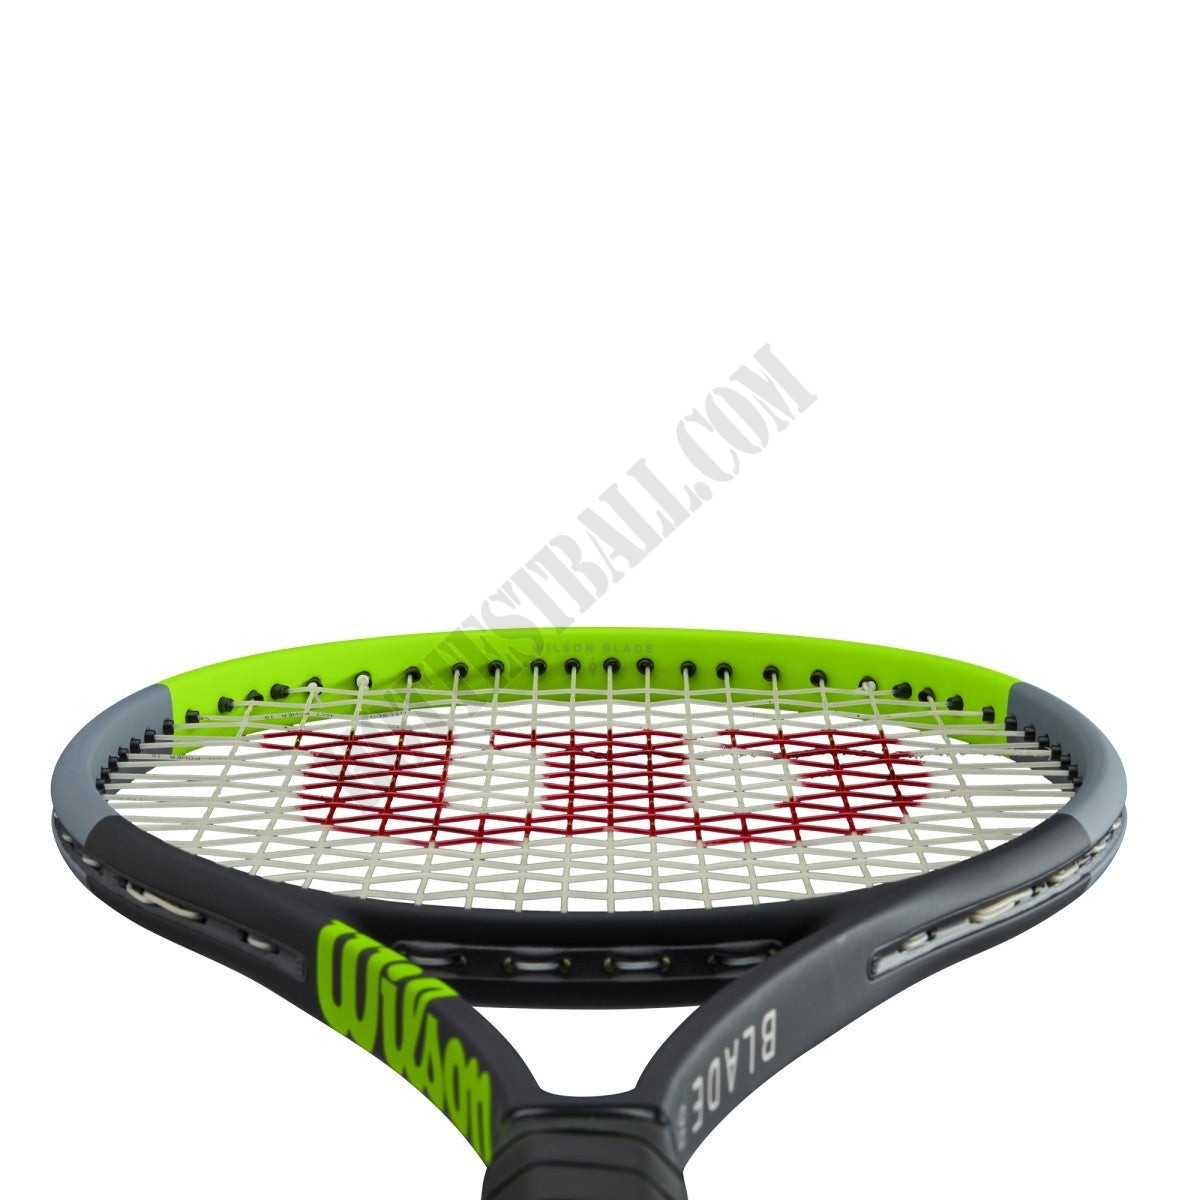 Blade 98 16x19 V7 Tennis Racket - Wilson Discount Store - -3